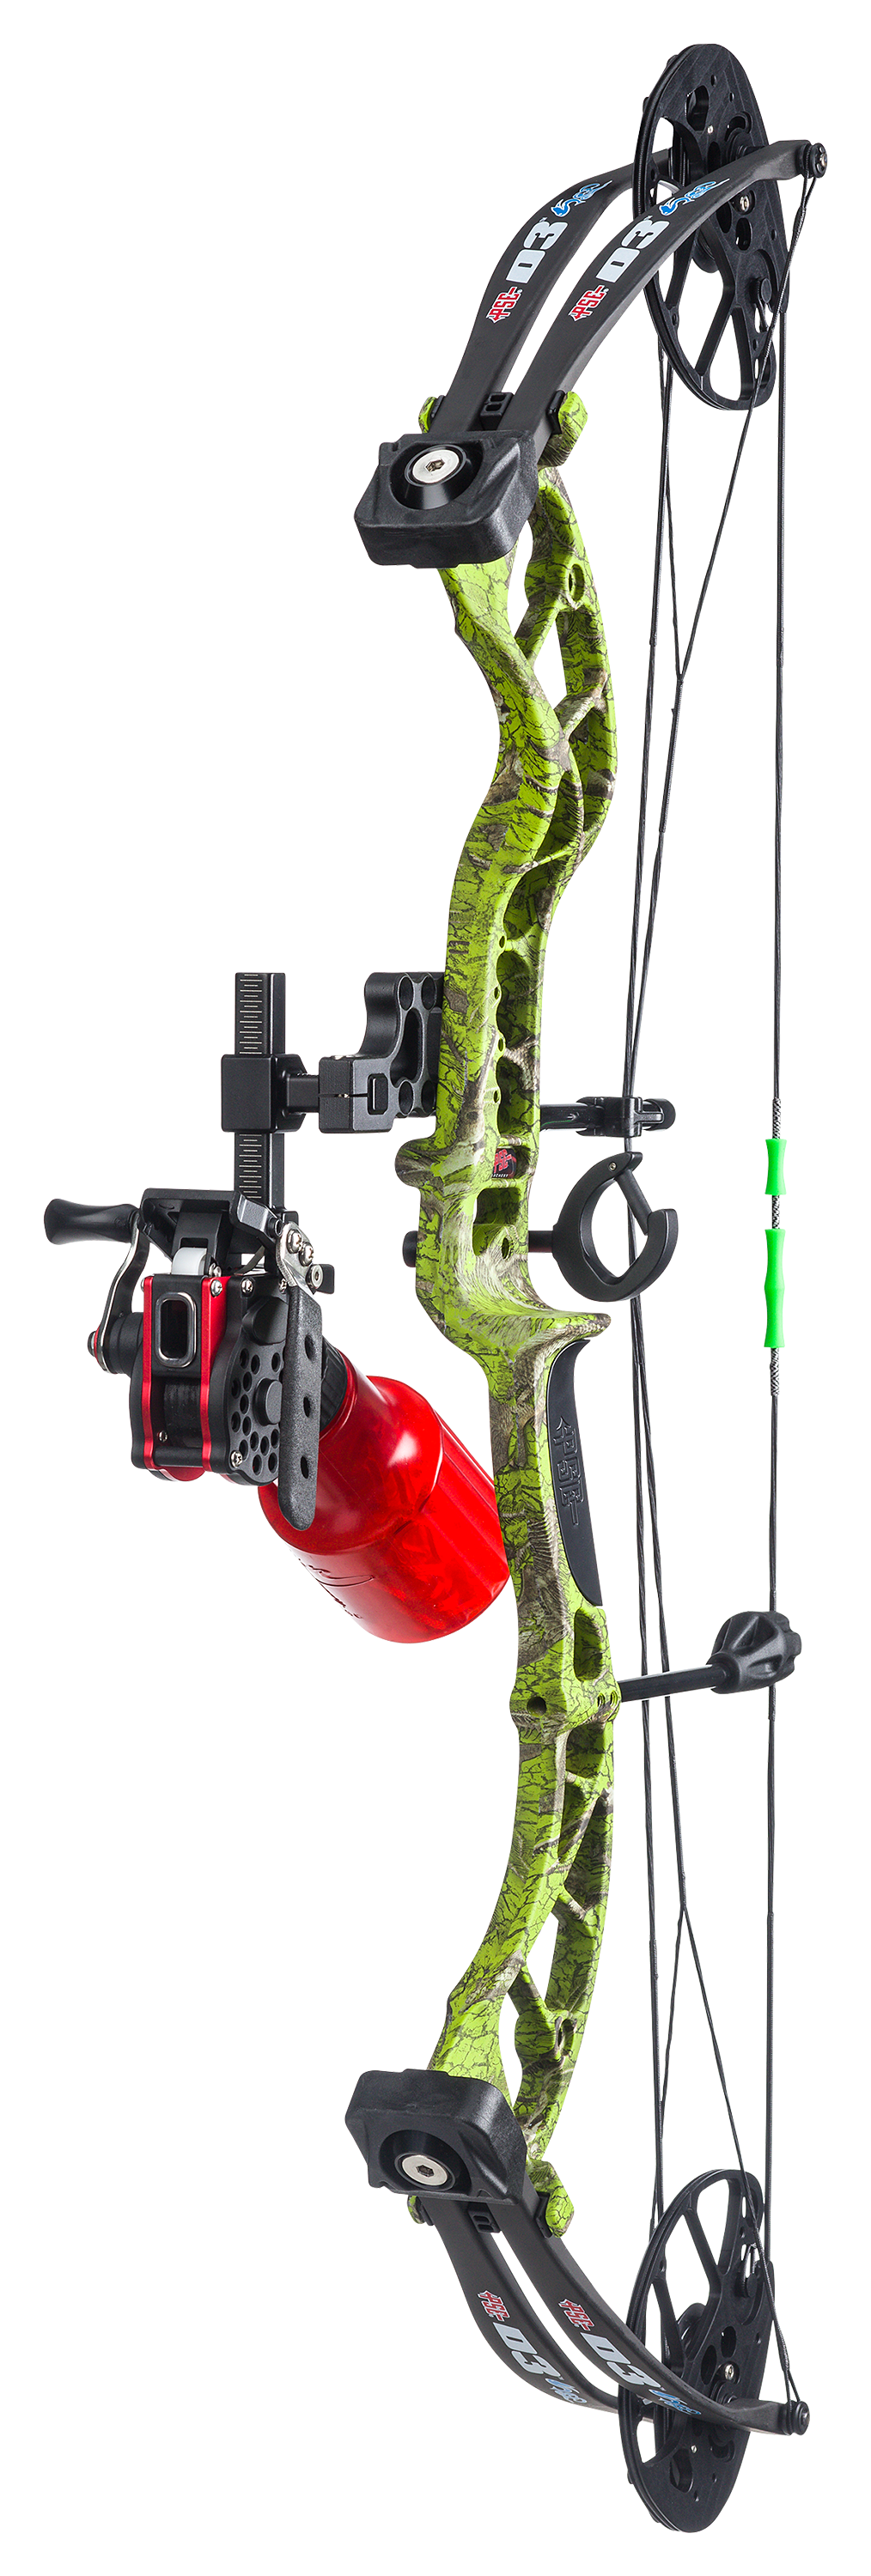 PSE Archery D3 Bowfishing Cajun Compound Bow Package